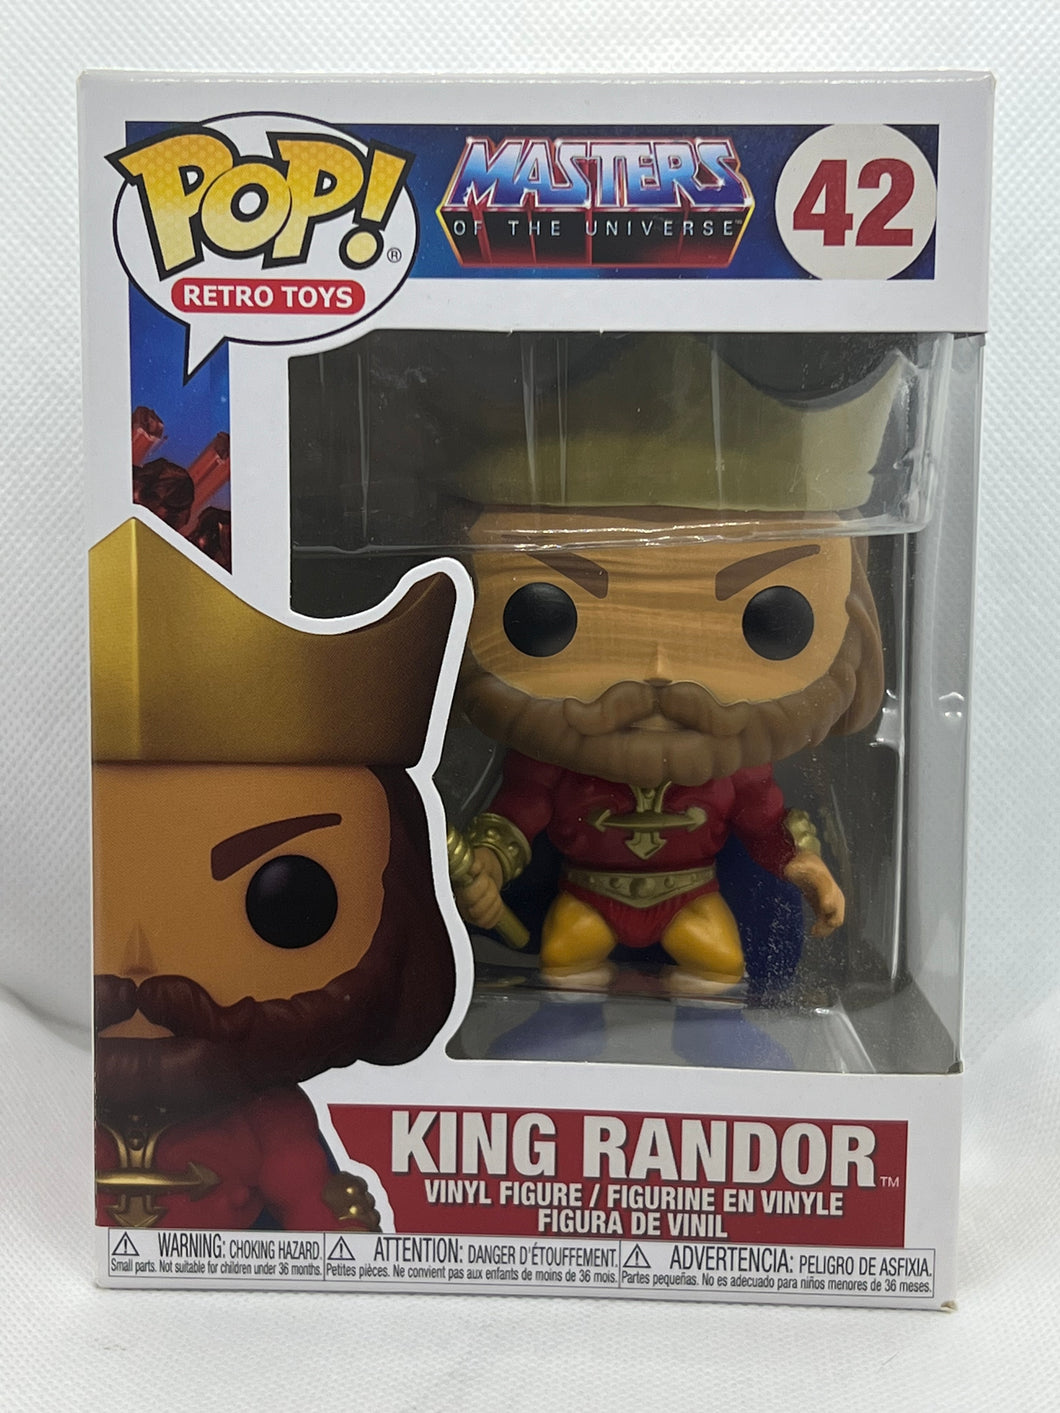 King Randor 42 Masters of the Universe Funko Pop